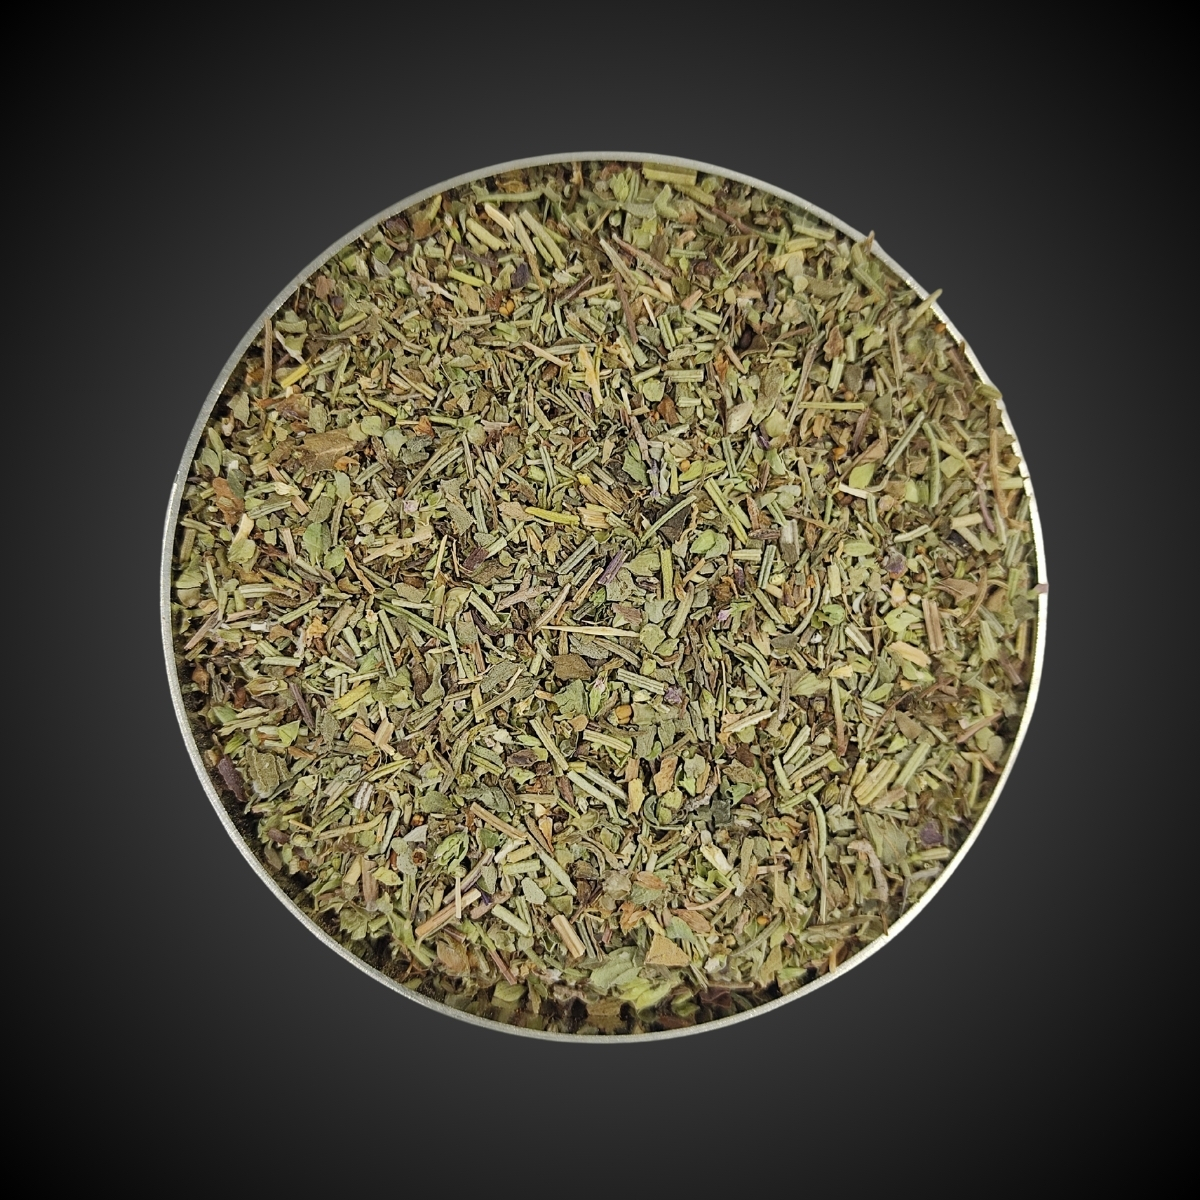 melange-herbes-saveur-provencale